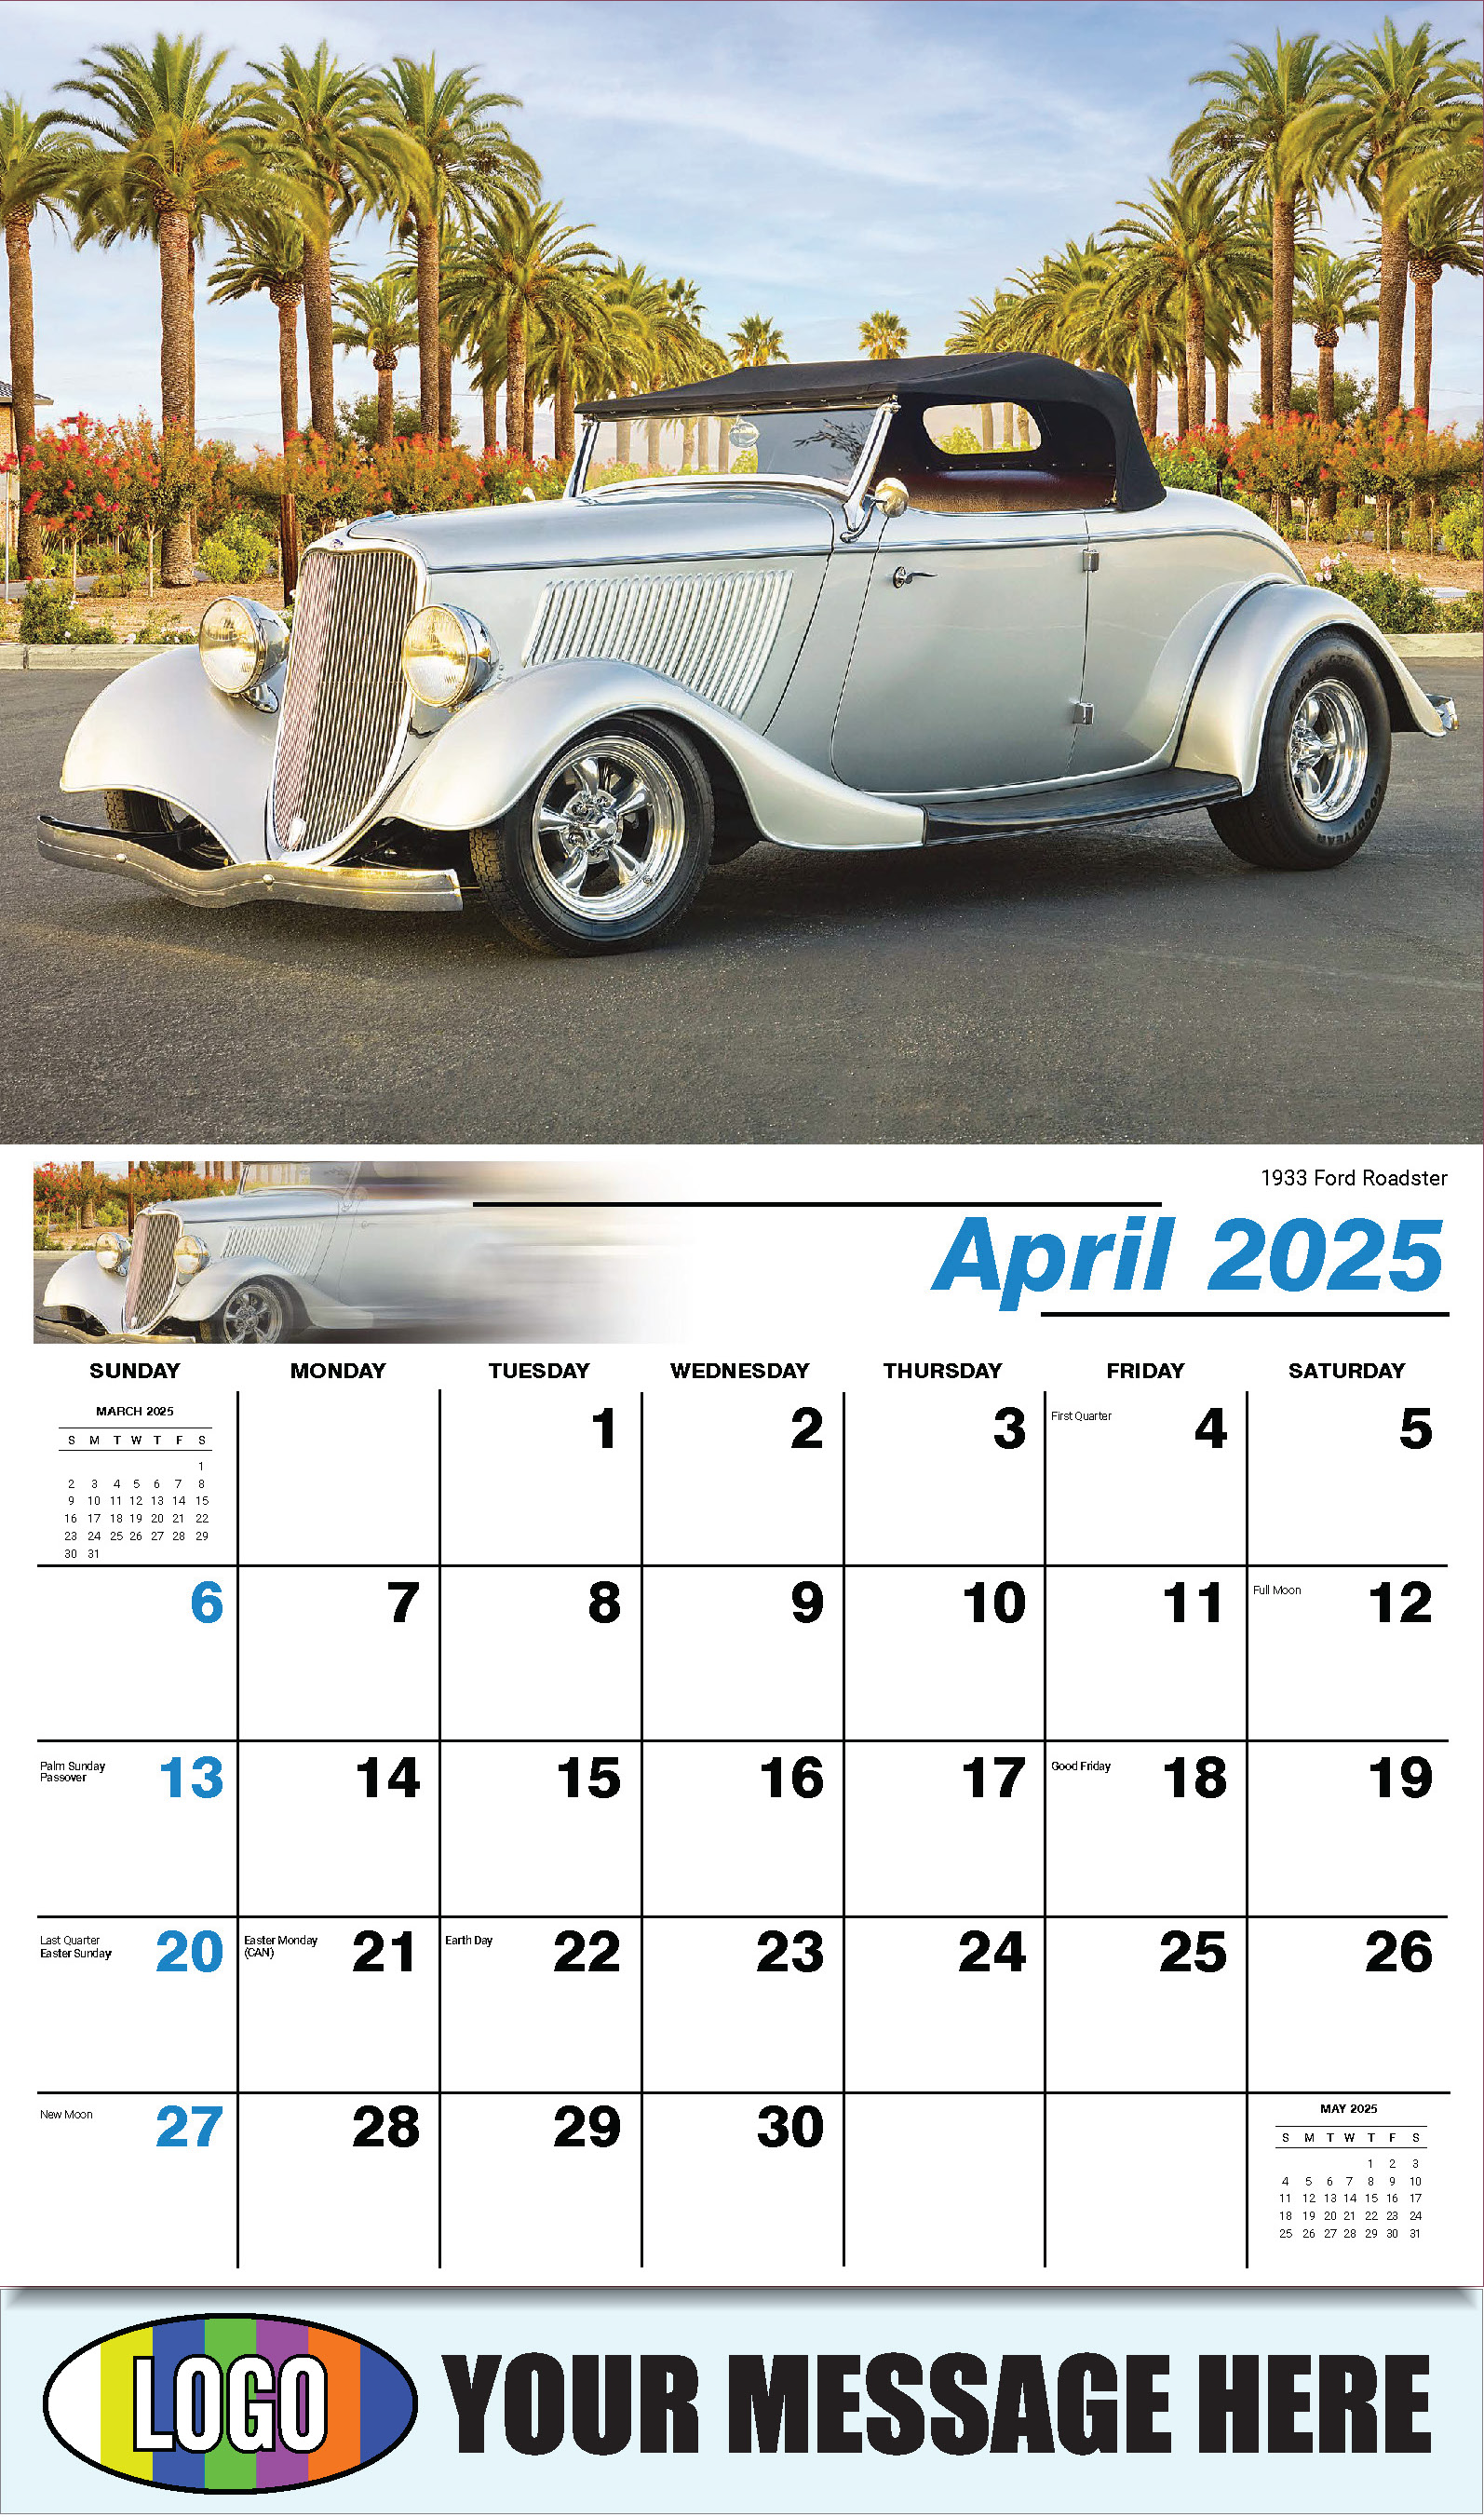 Henry's Heritage FORD Cars 2025 Automotive Business Promo Calendar - April